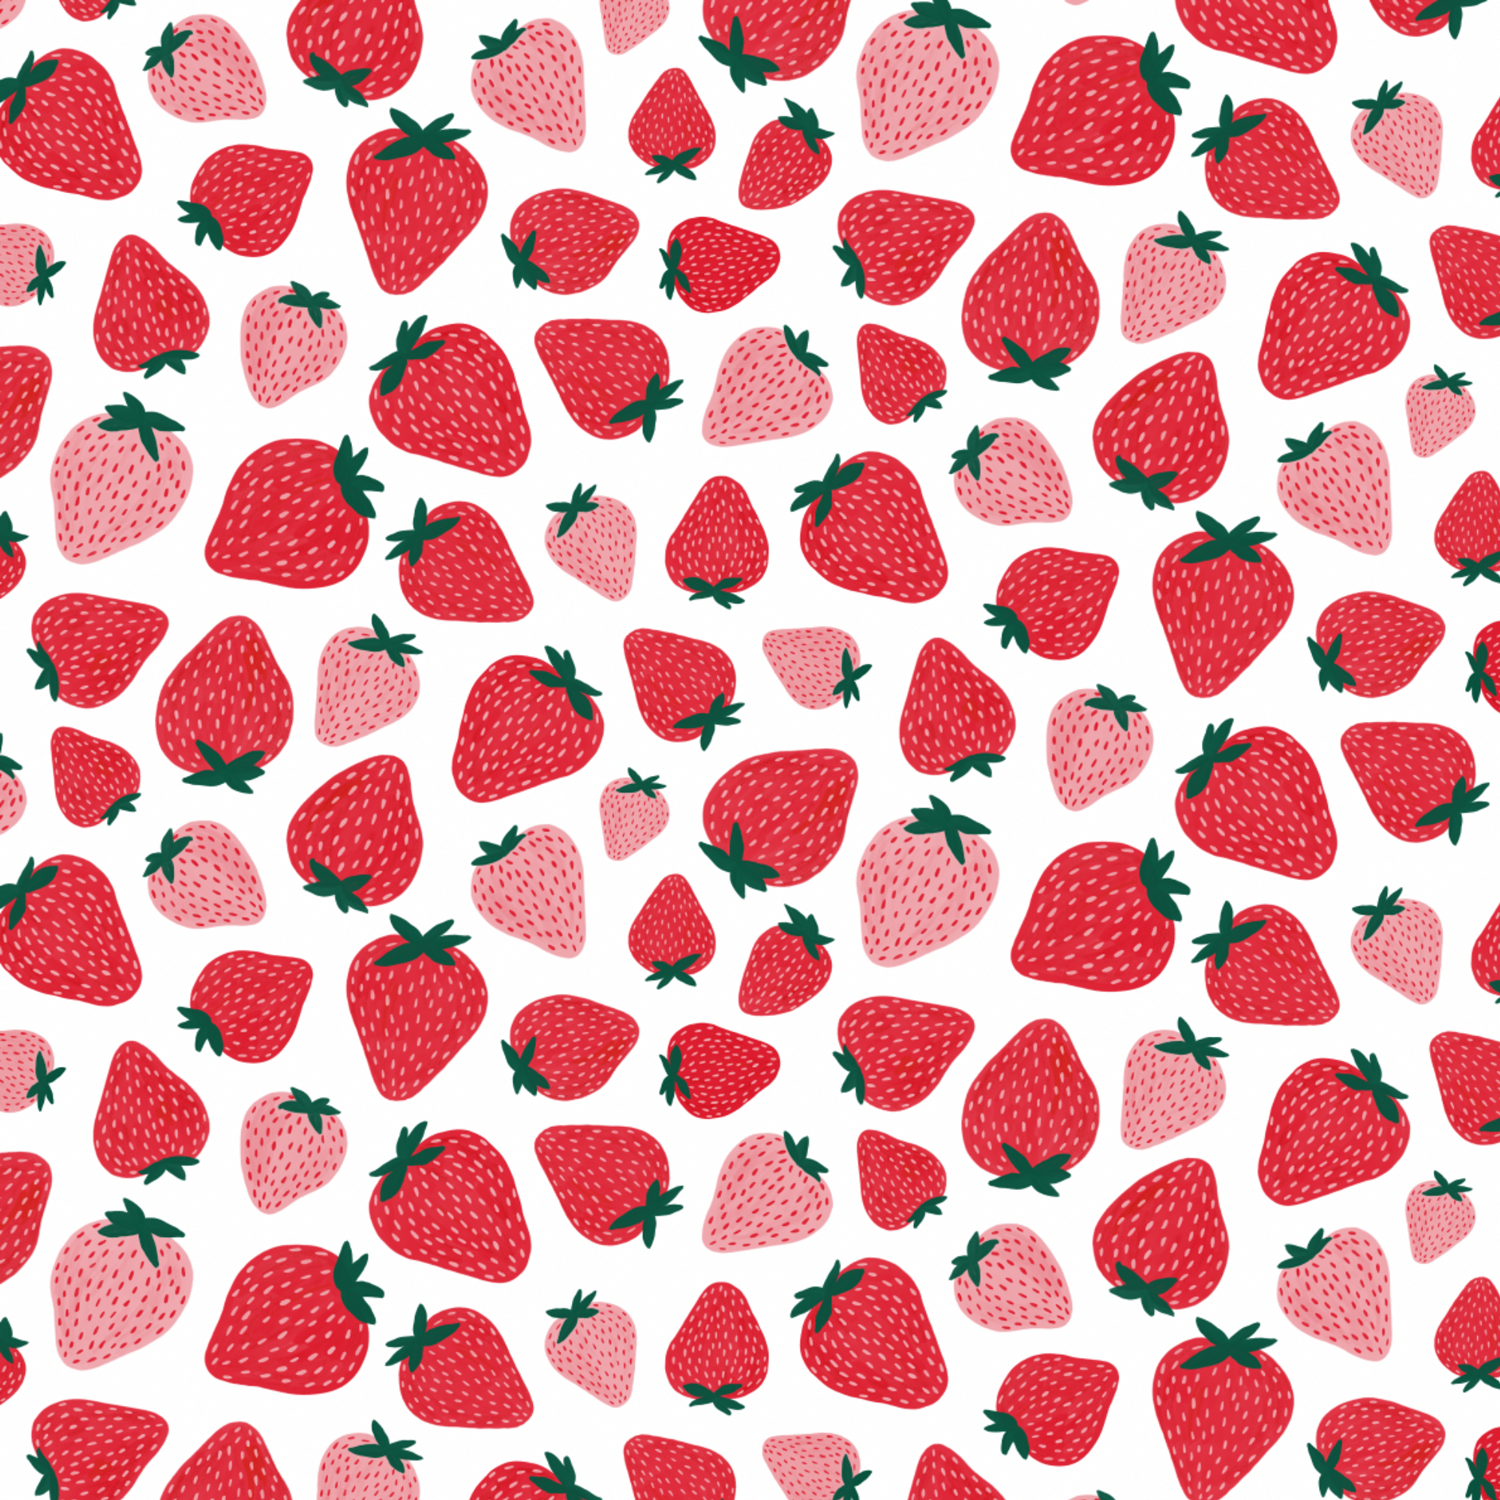 strawberry_pattern_v2.png